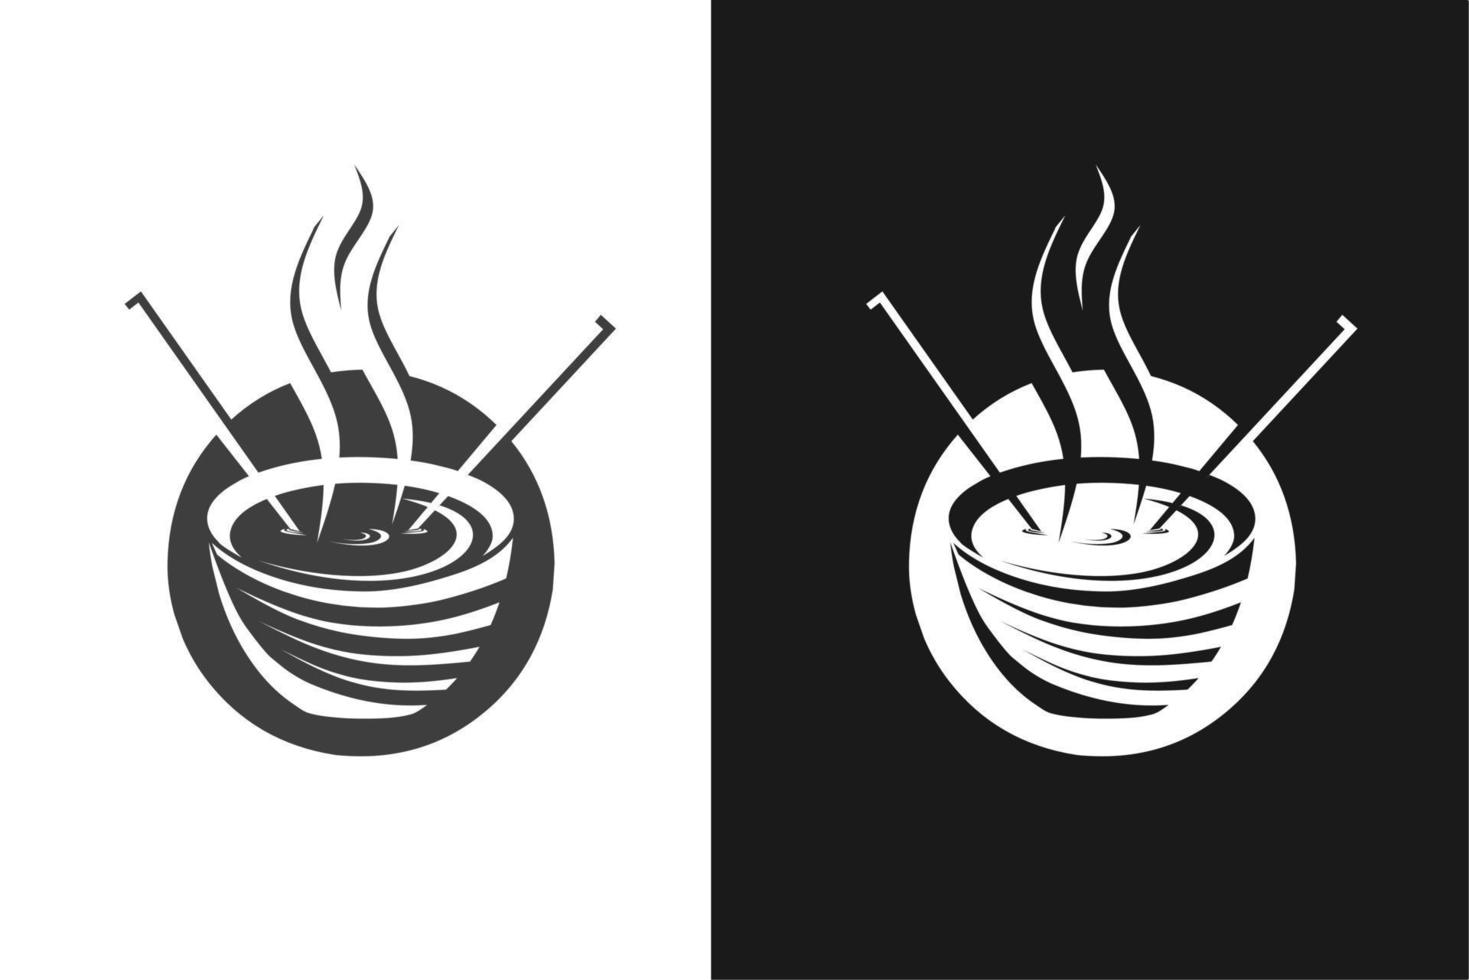 food, bowl, chopsticks and hot water design logo elements vector